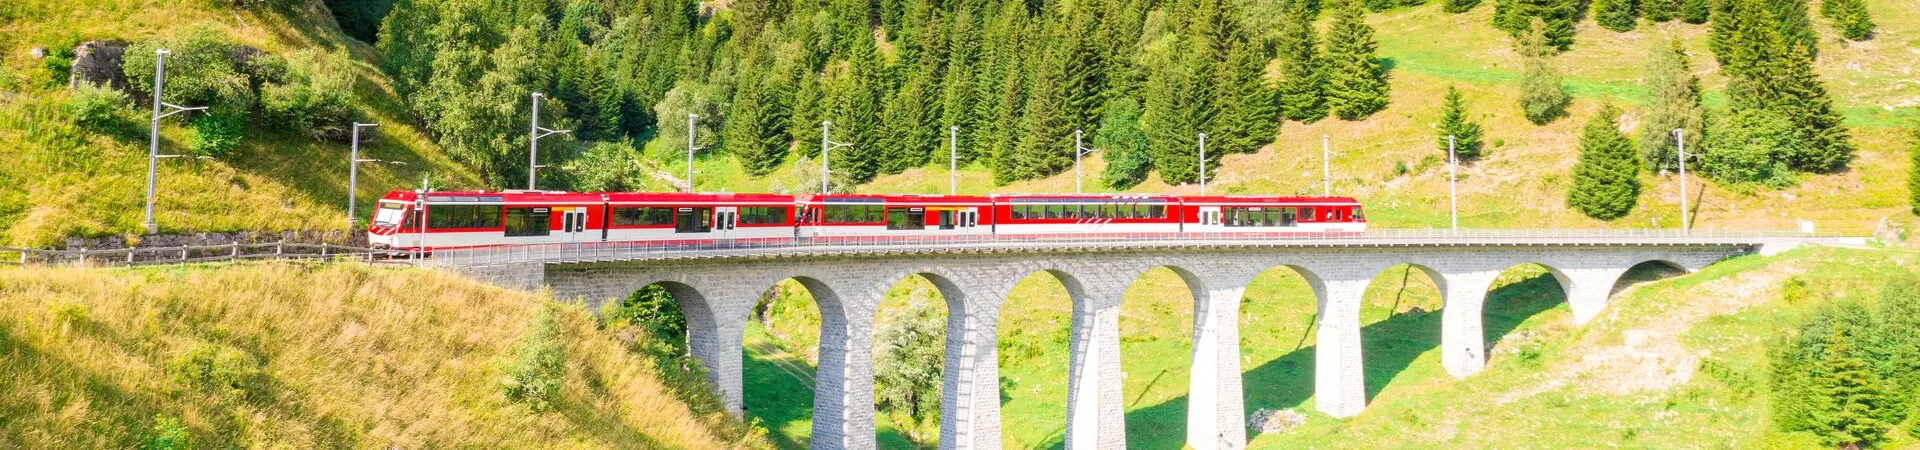 Glacier Express on bridge in front of green rolling hills in Switzerland